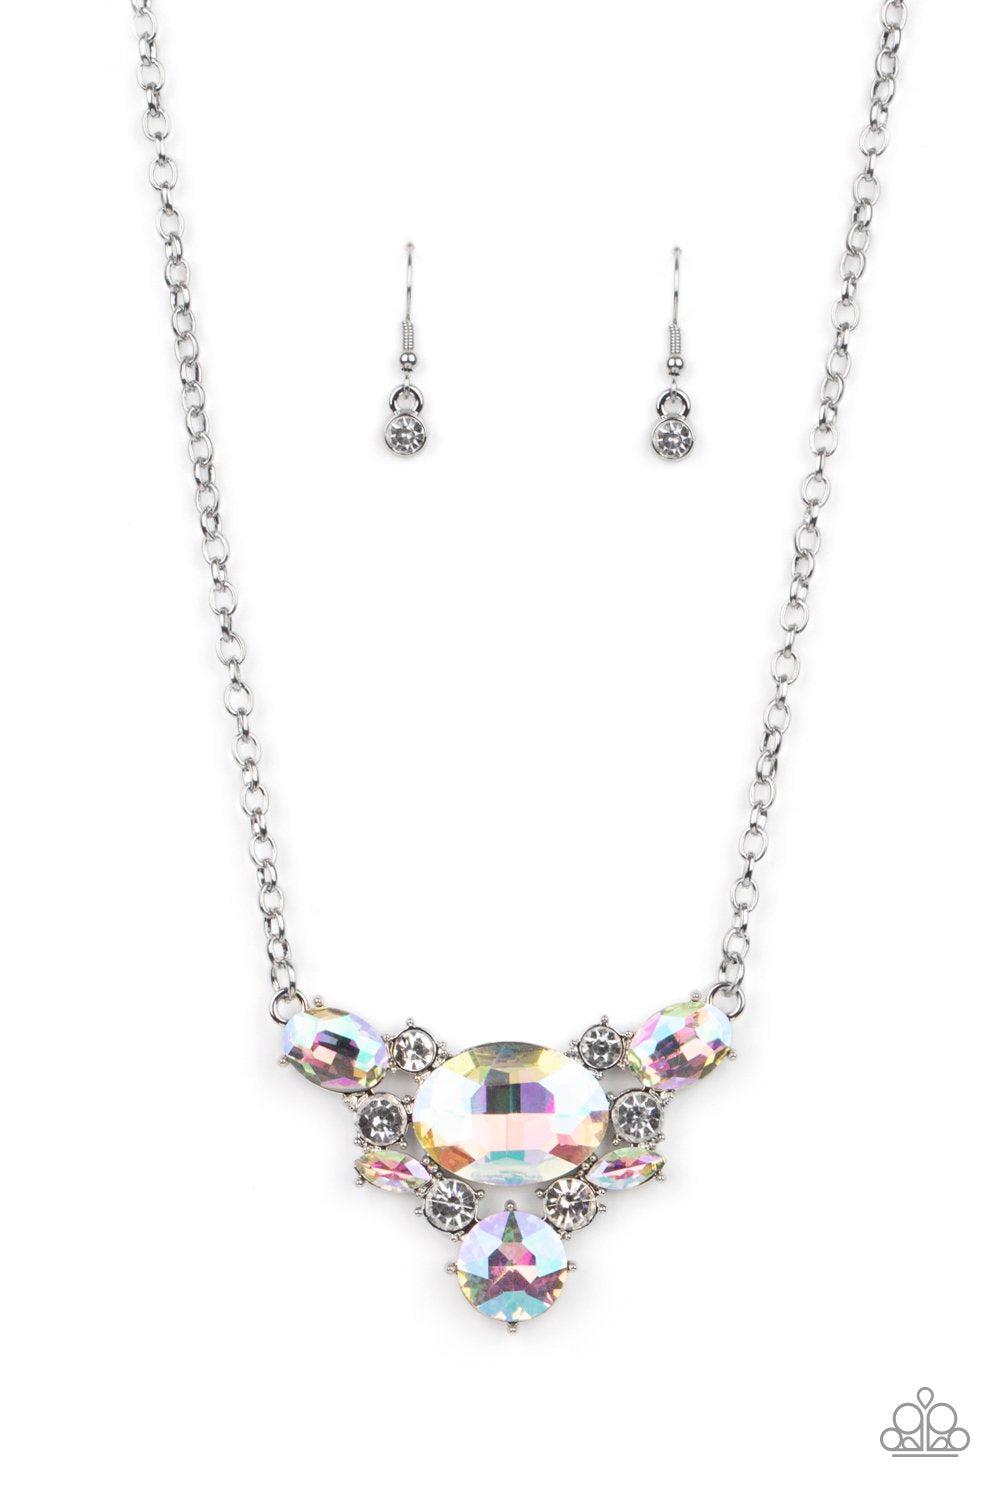 Cosmic Coronation Multi Iridescent Rhinestone Necklace - Paparazzi Accessories- lightbox - CarasShop.com - $5 Jewelry by Cara Jewels